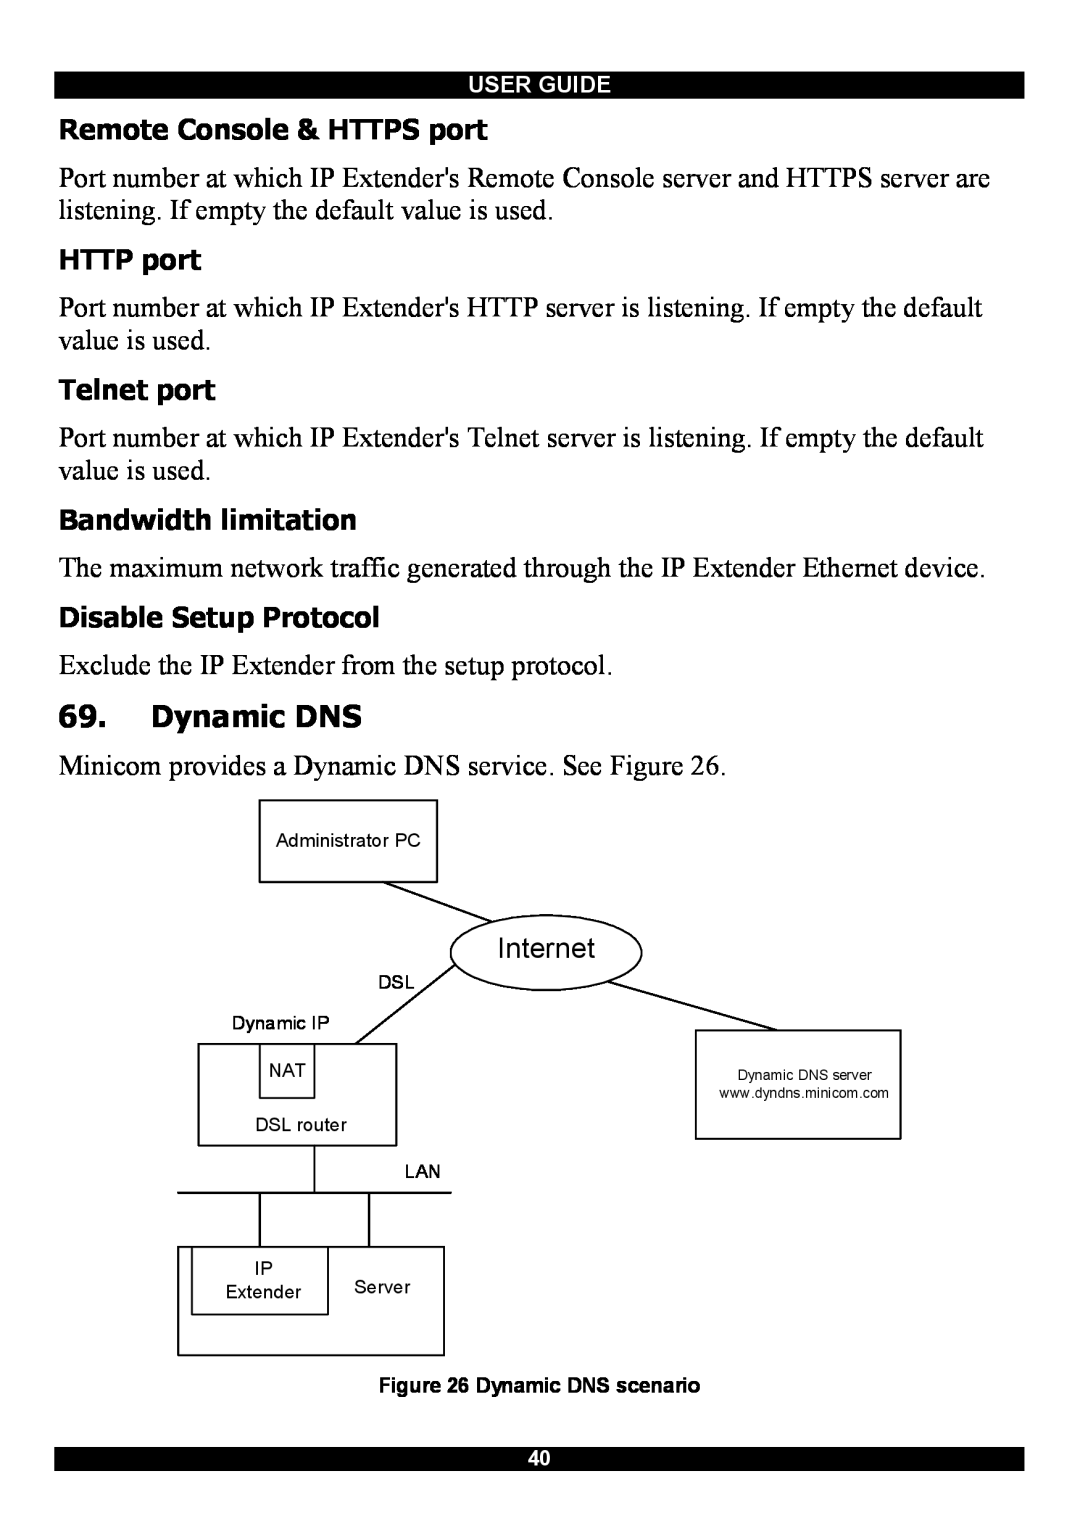 Minicom Advanced Systems Smart IP Extender manual Dynamic DNS, Remote Console & HTTPS port, HTTP port, Telnet port 